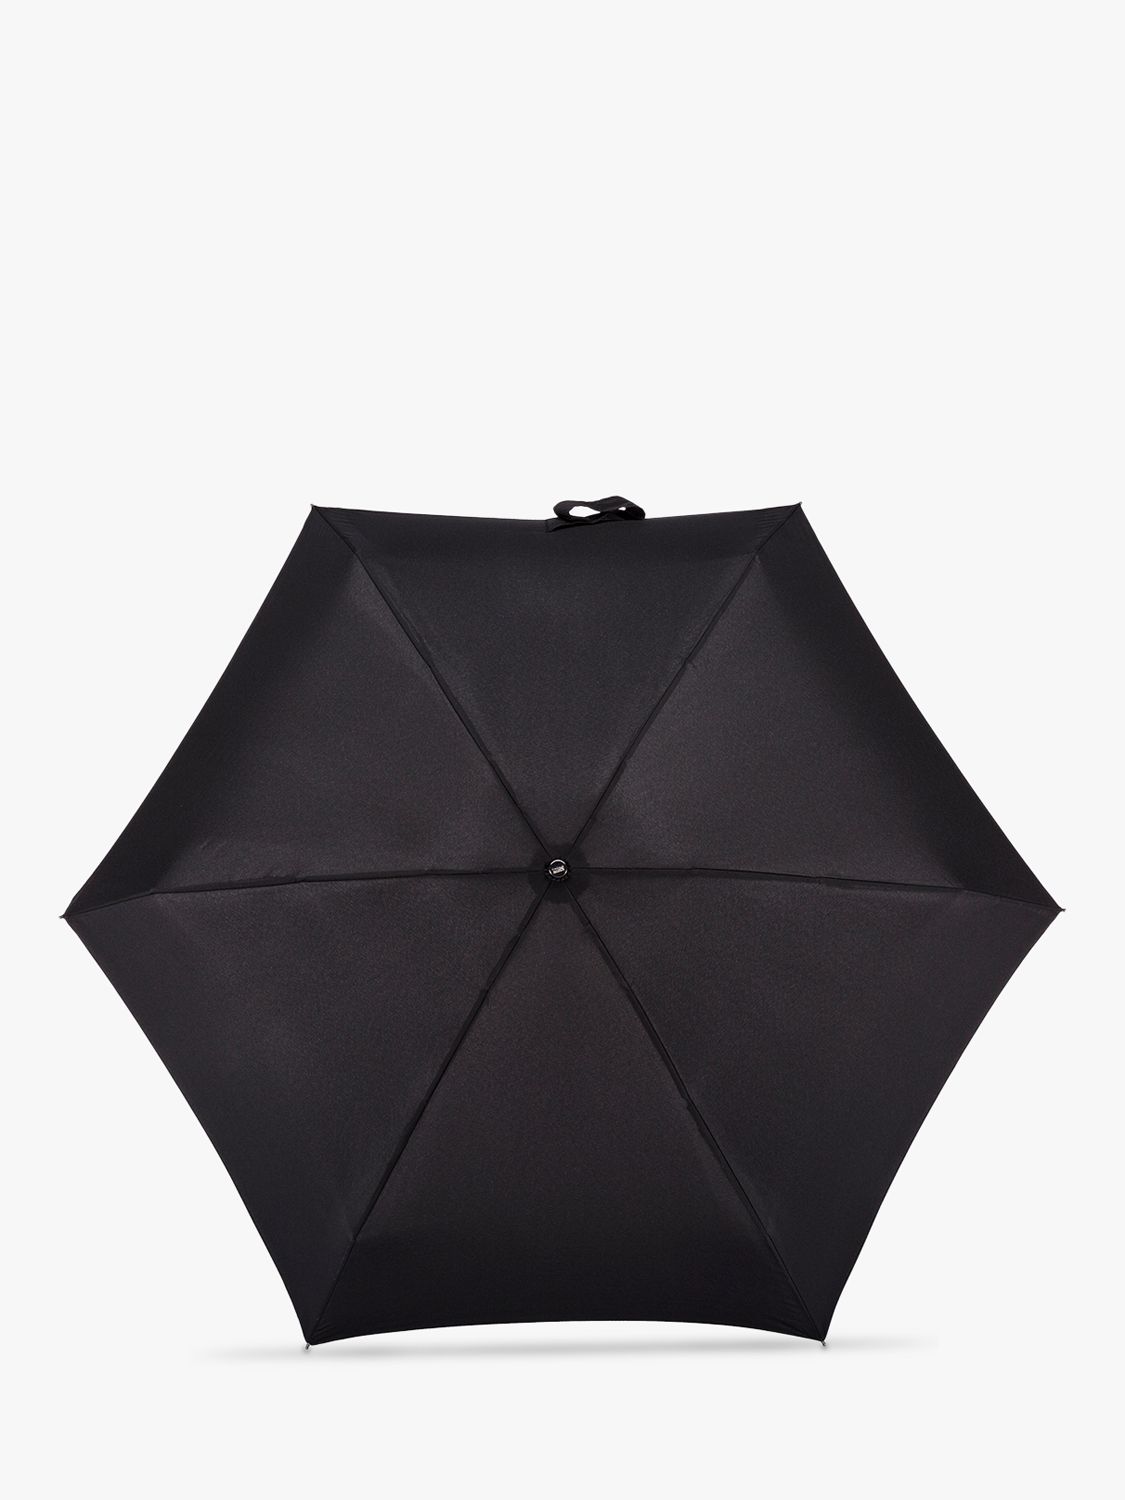 totes X-tra Strong Umbrella, Small, Black